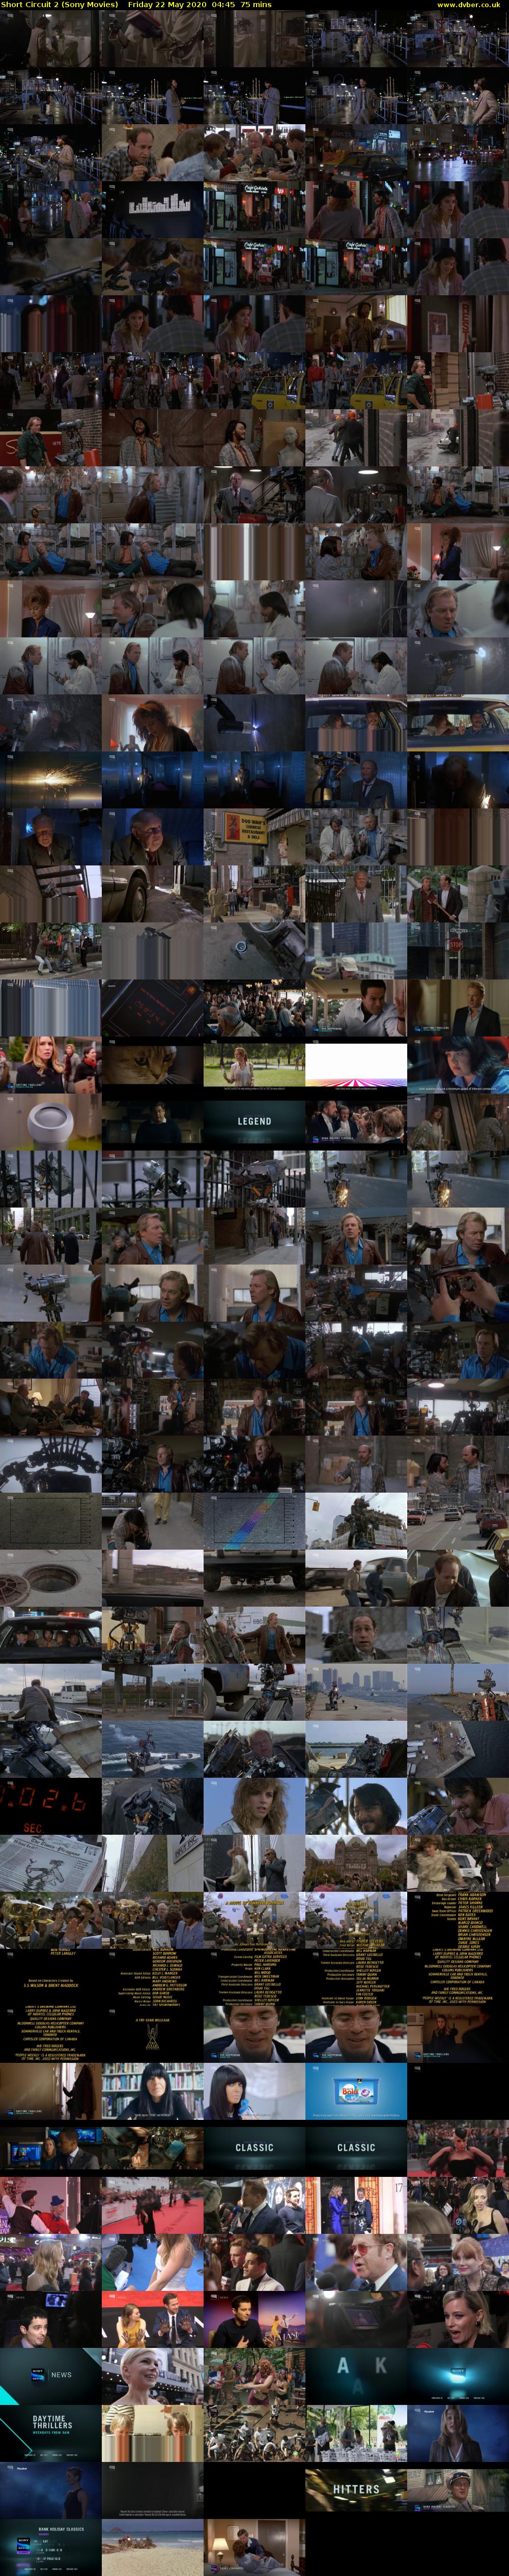 Short Circuit 2 (Sony Movies) Friday 22 May 2020 04:45 - 06:00